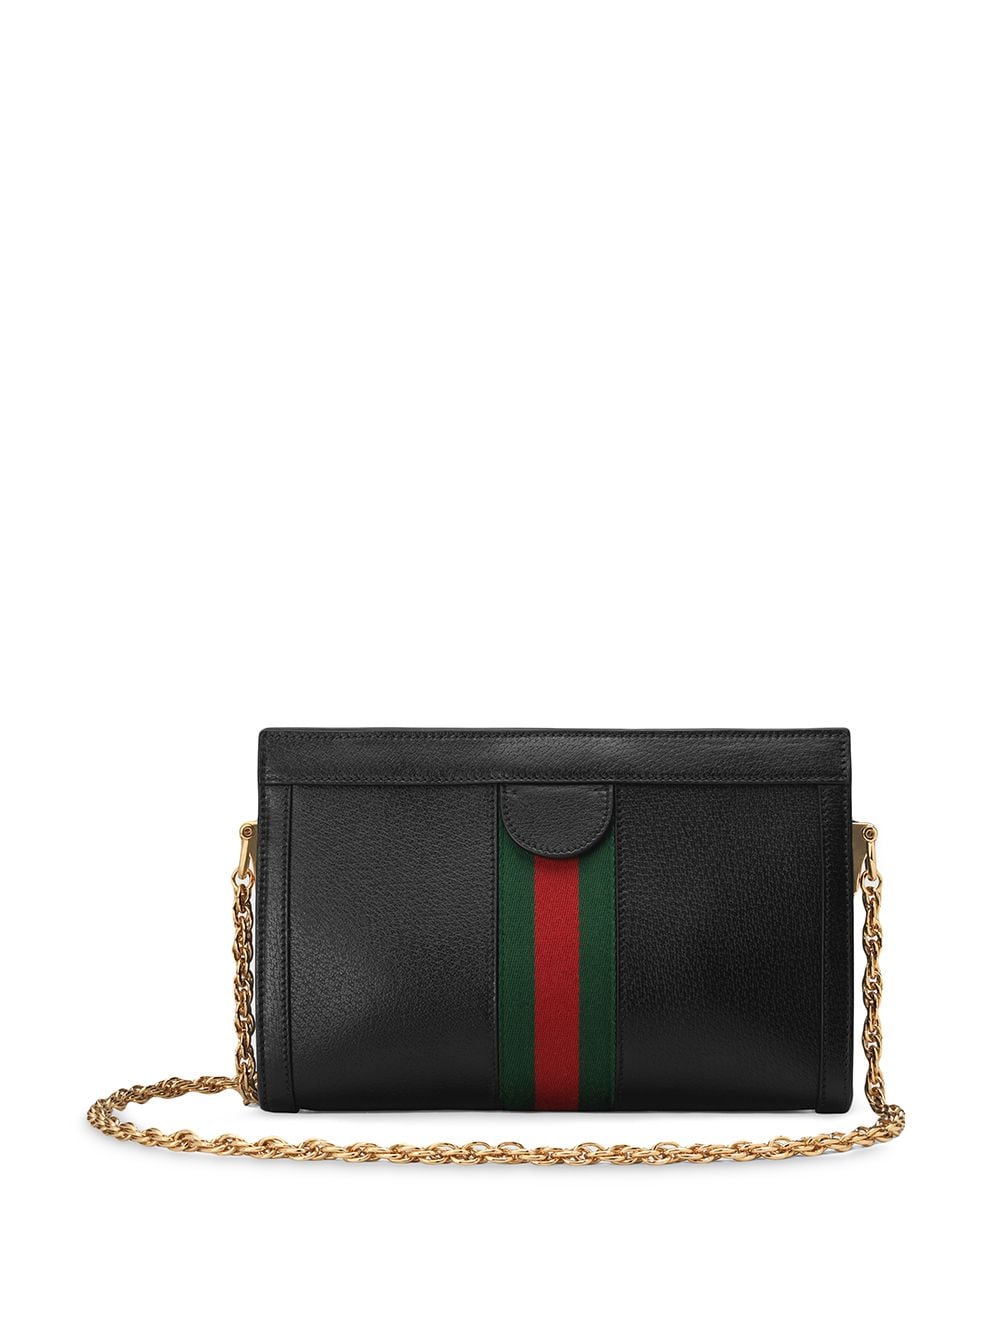 Gucci Ophidia Shoulder Bag Small Black